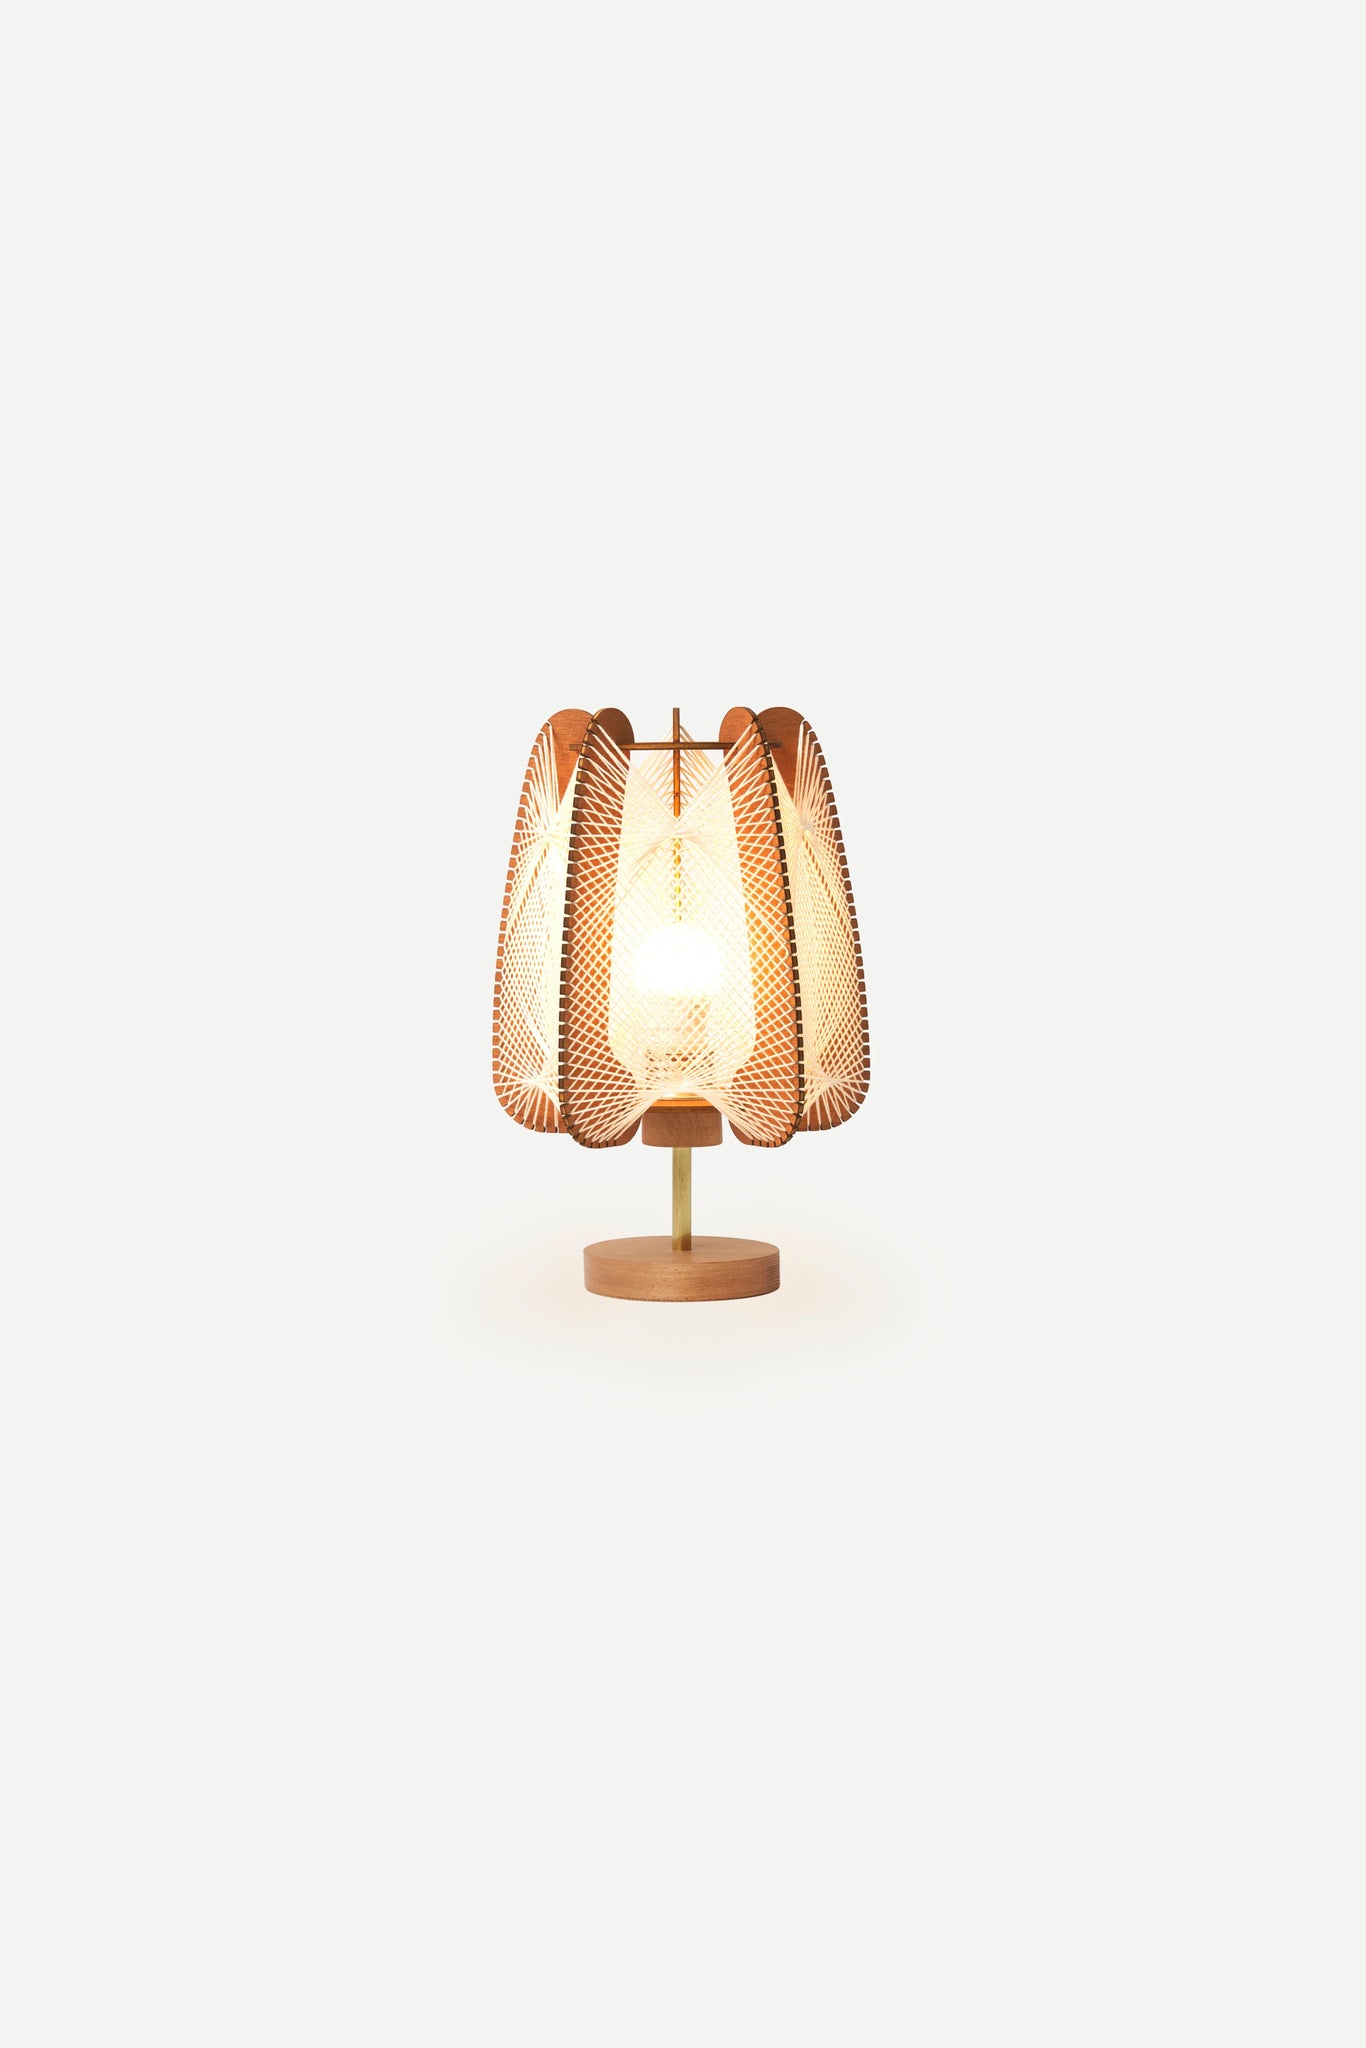 LAFABLIGHT "ARIOCA / KALYPSO TABLE LAMP"